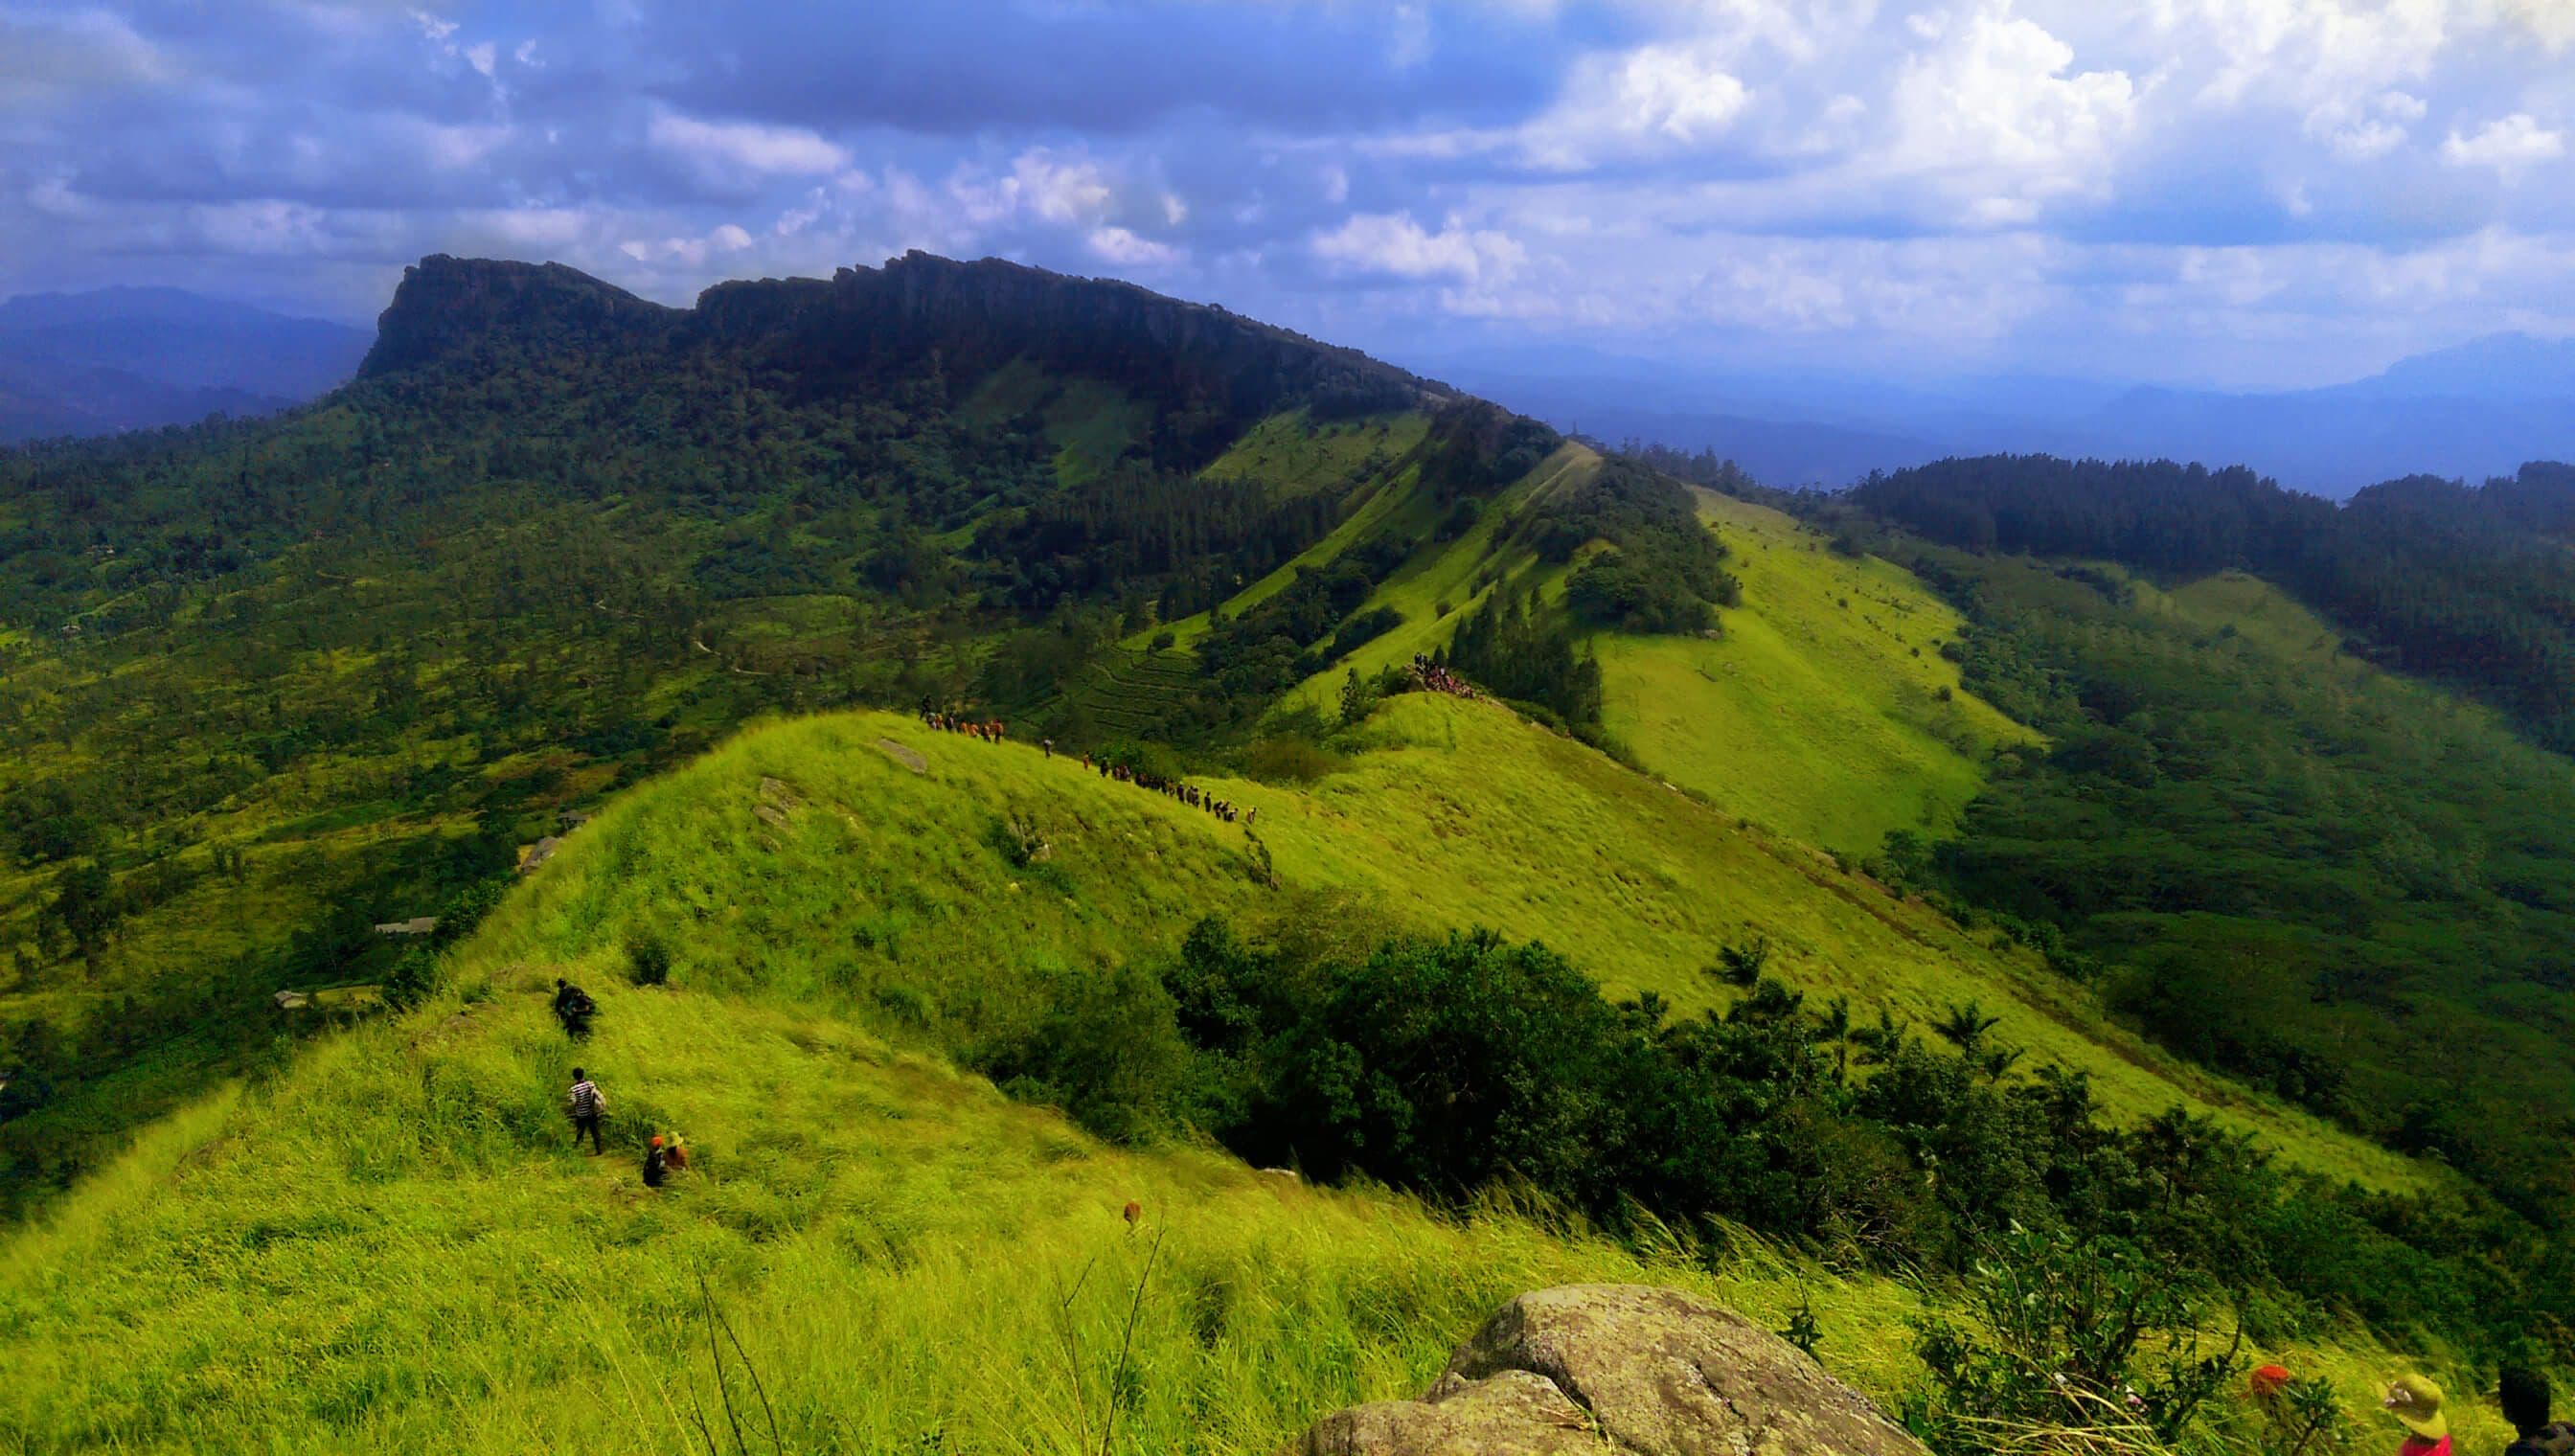 The view of beautiful Hanthana mountain and trekking people